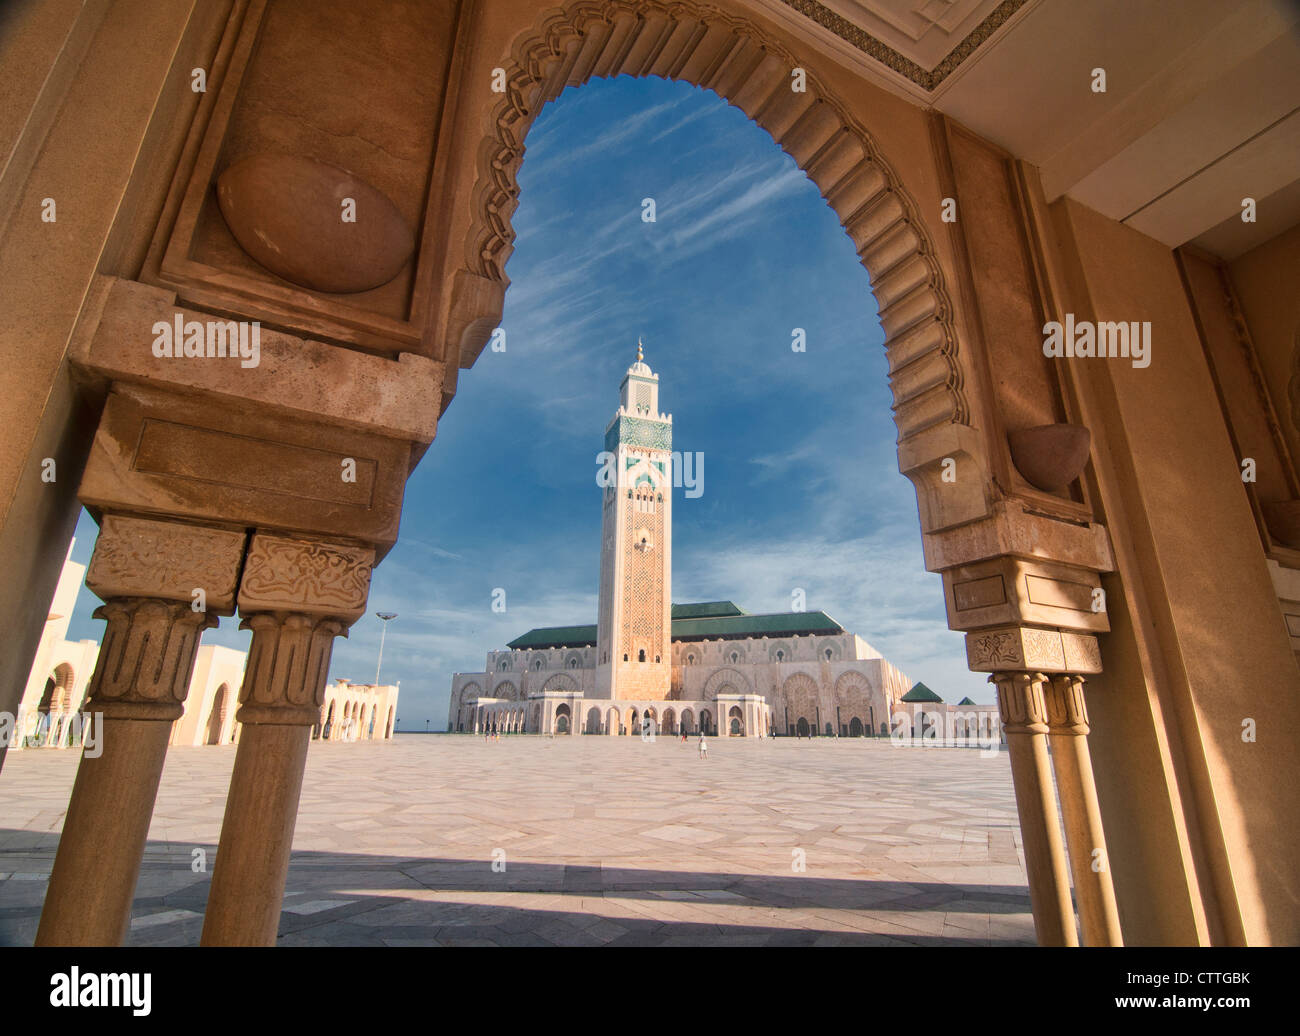 La magnifique Mosquée Hassan II à Casablanca, Maroc Banque D'Images